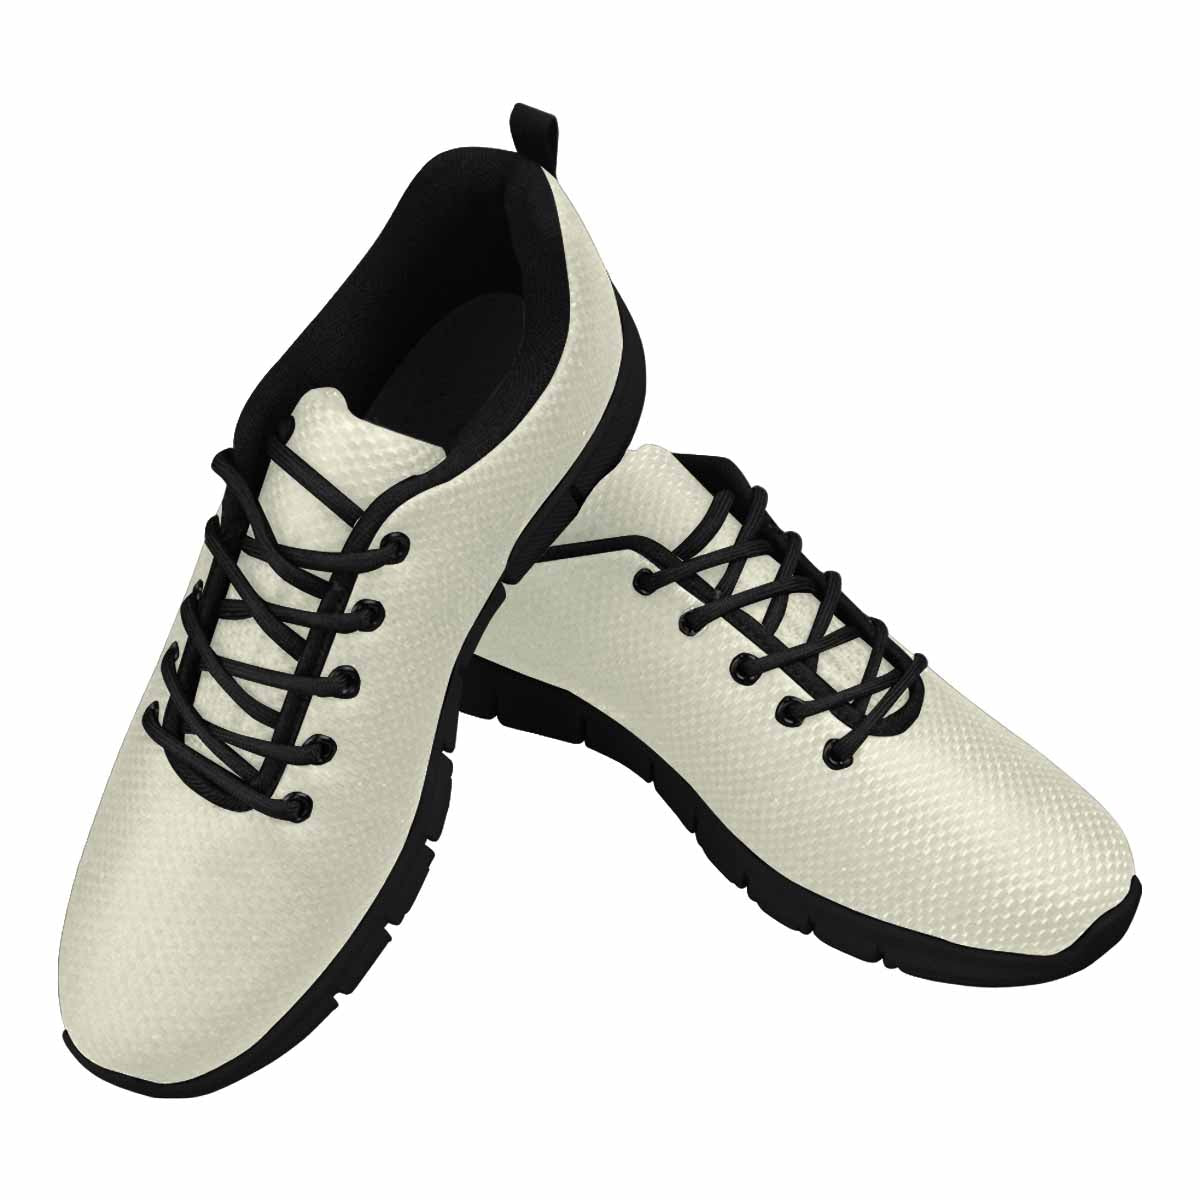 Sneakers For Men, Beige Running Shoes